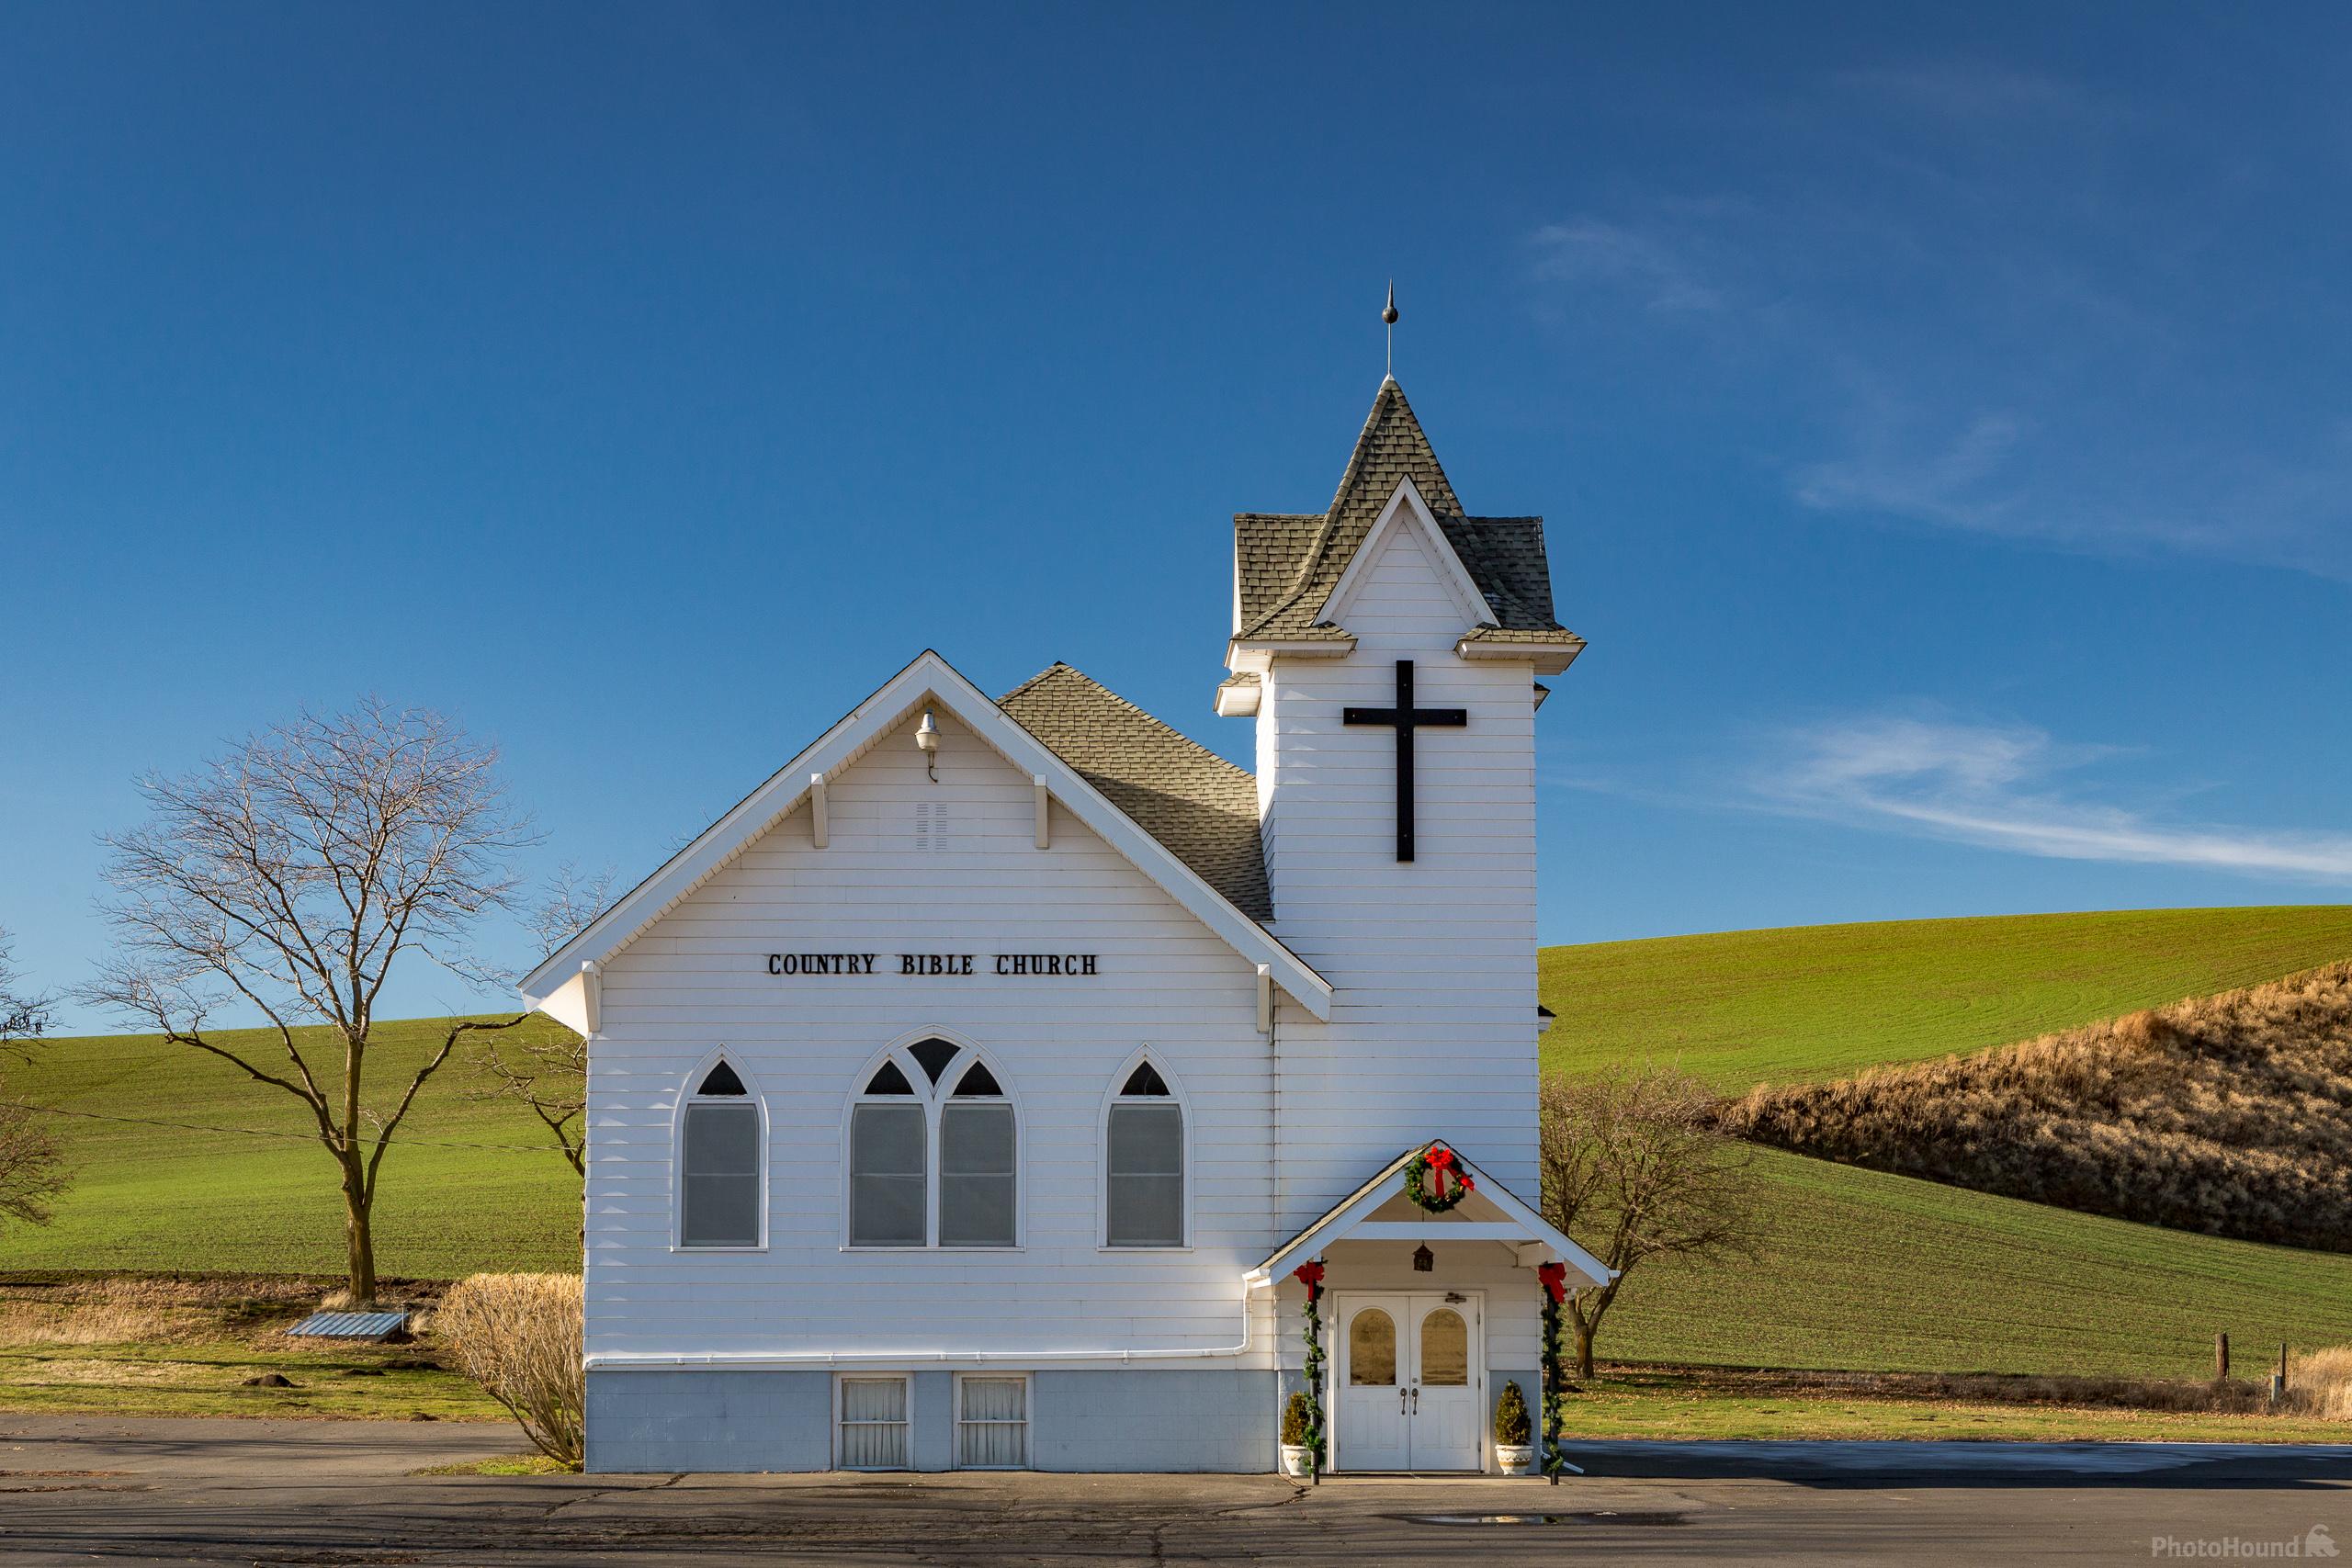 Image of Country Bible Church by Joe Becker